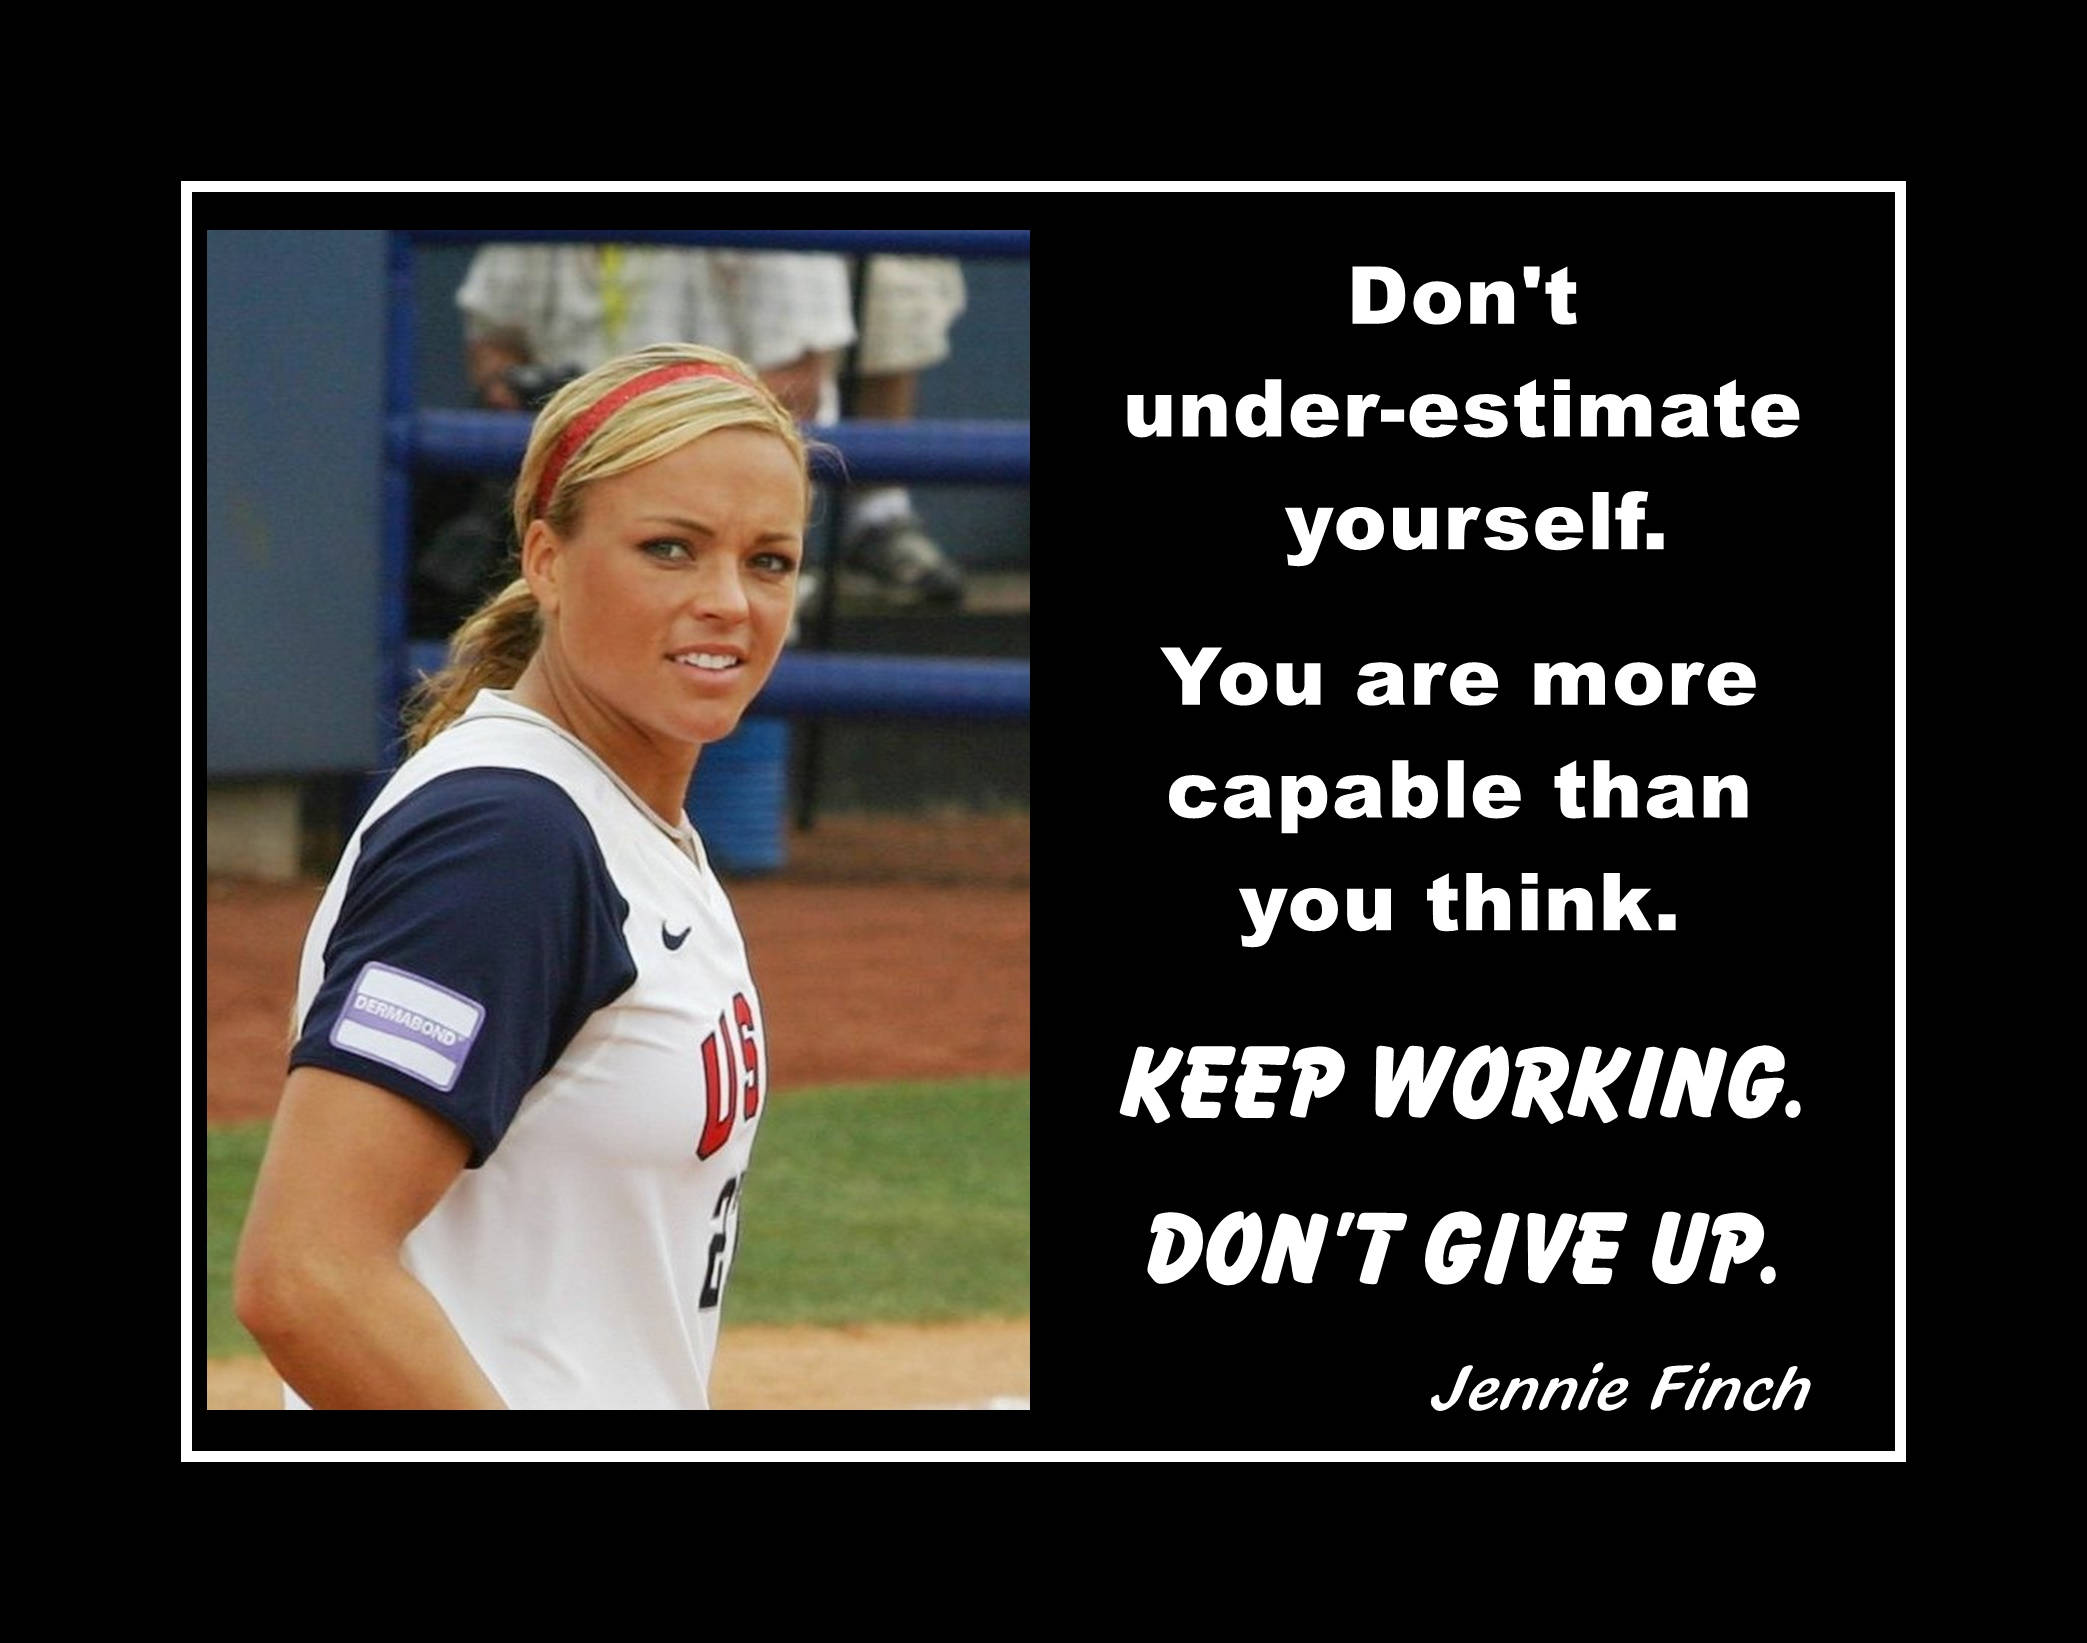 Jennie Finch Softball Quote Motivational Poster, Coaching Wall Decor